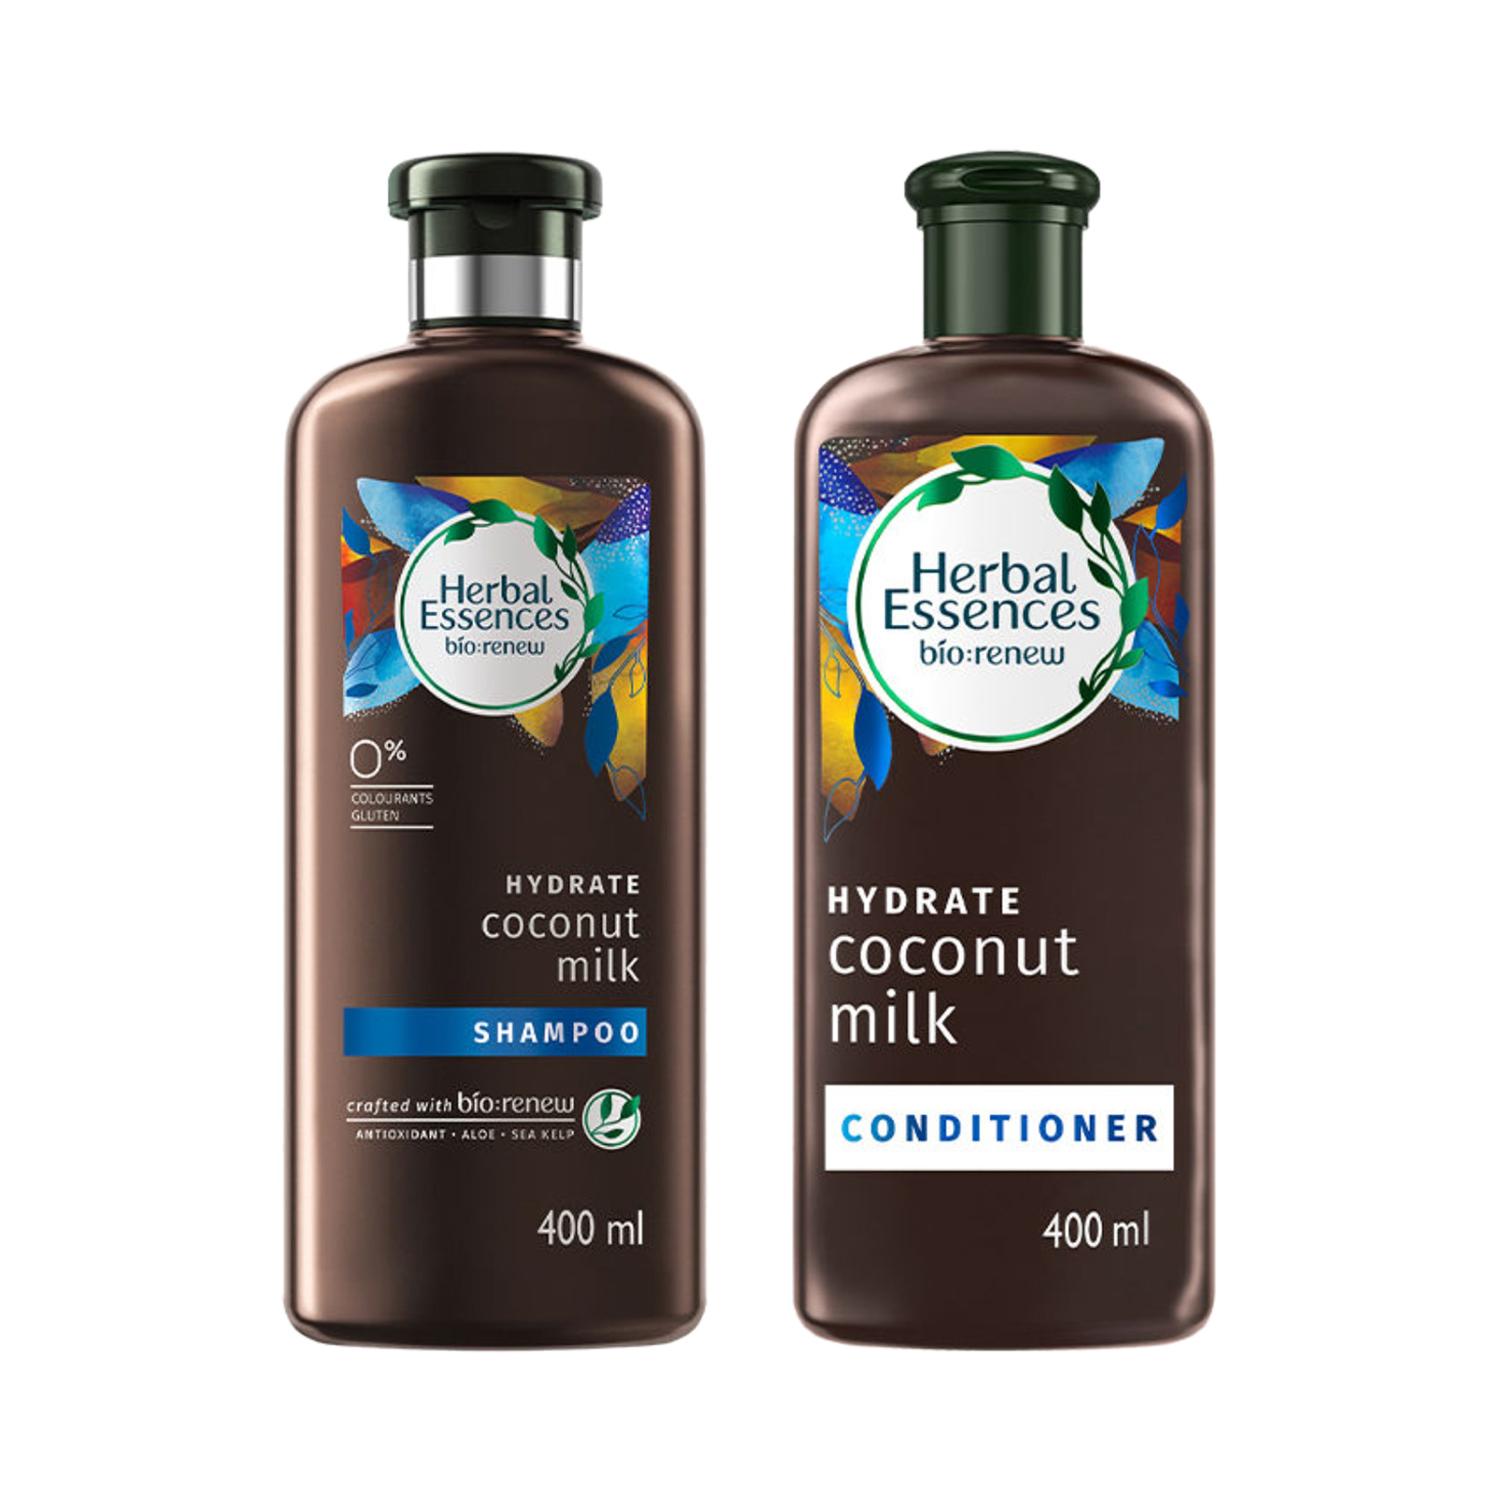 Herbal Essences | Herbal Essences Coconut Milk Shampoo (400 ml) + Conditioner (400 ml) Combo